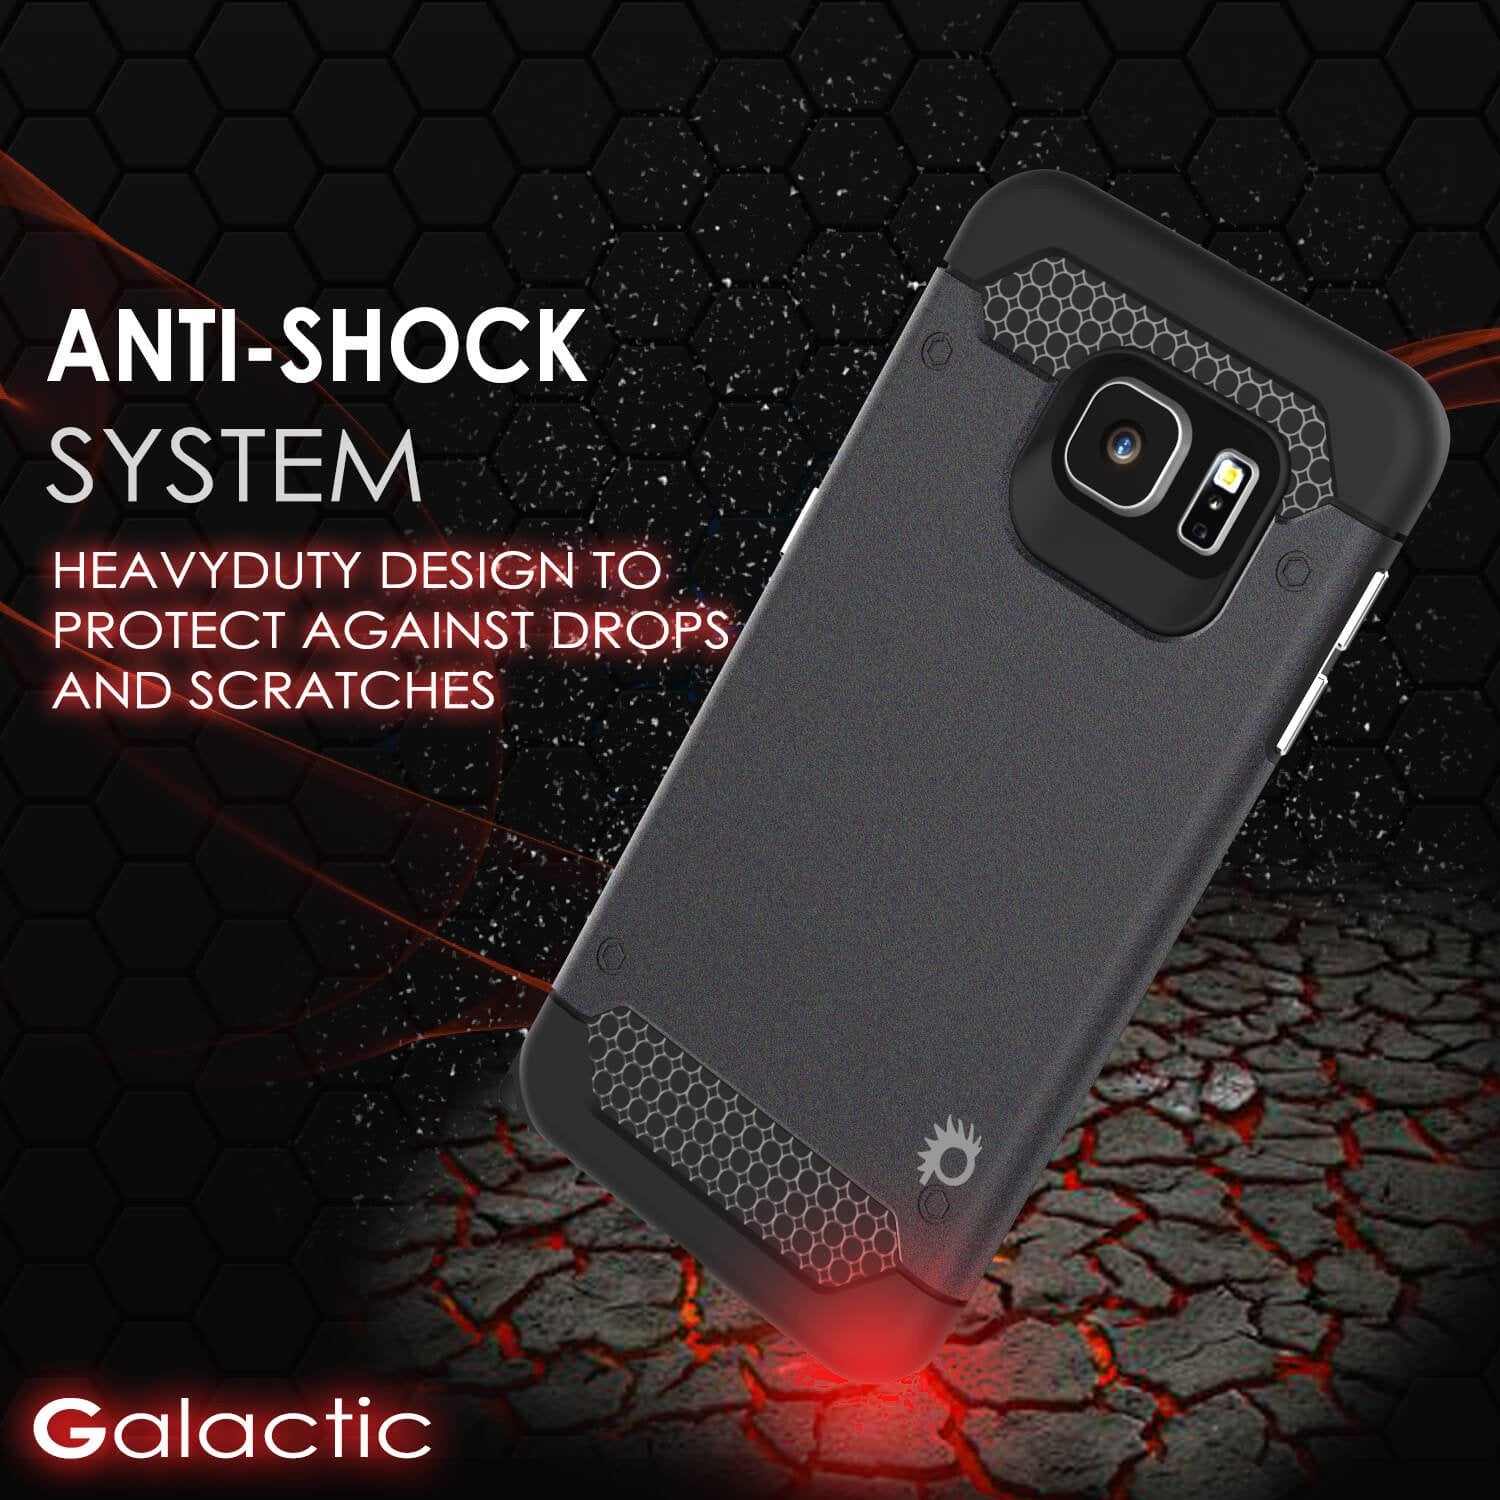 Galaxy s6 EDGE Case PunkCase Galactic Black Series Slim Armor Soft Cover w/ Screen Protector - PunkCase NZ